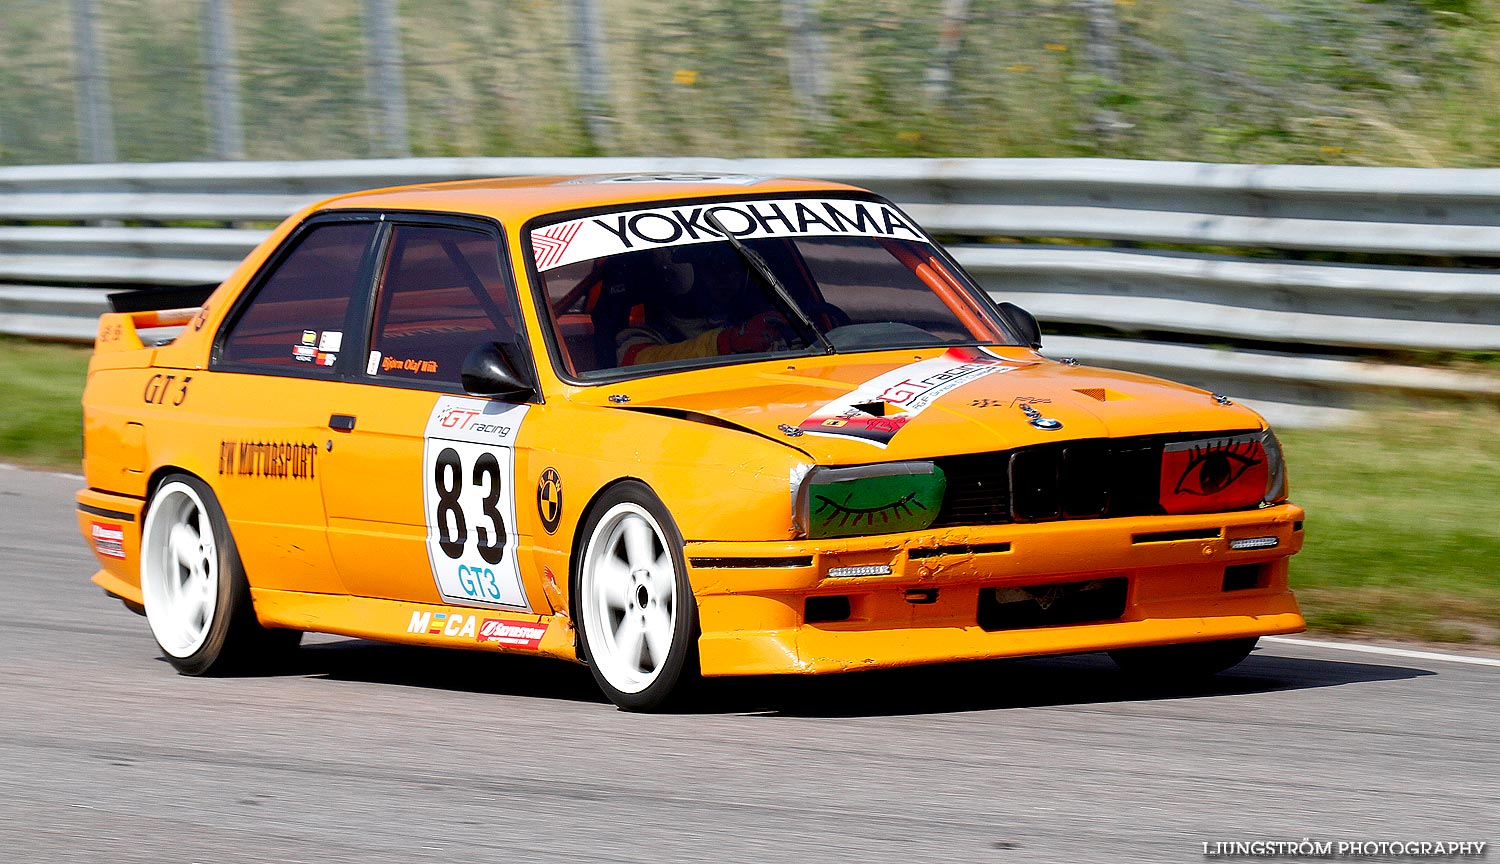 SSK Raceweek,mix,Kinnekulle Ring,Götene,Sverige,Motorsport,,2011,44459